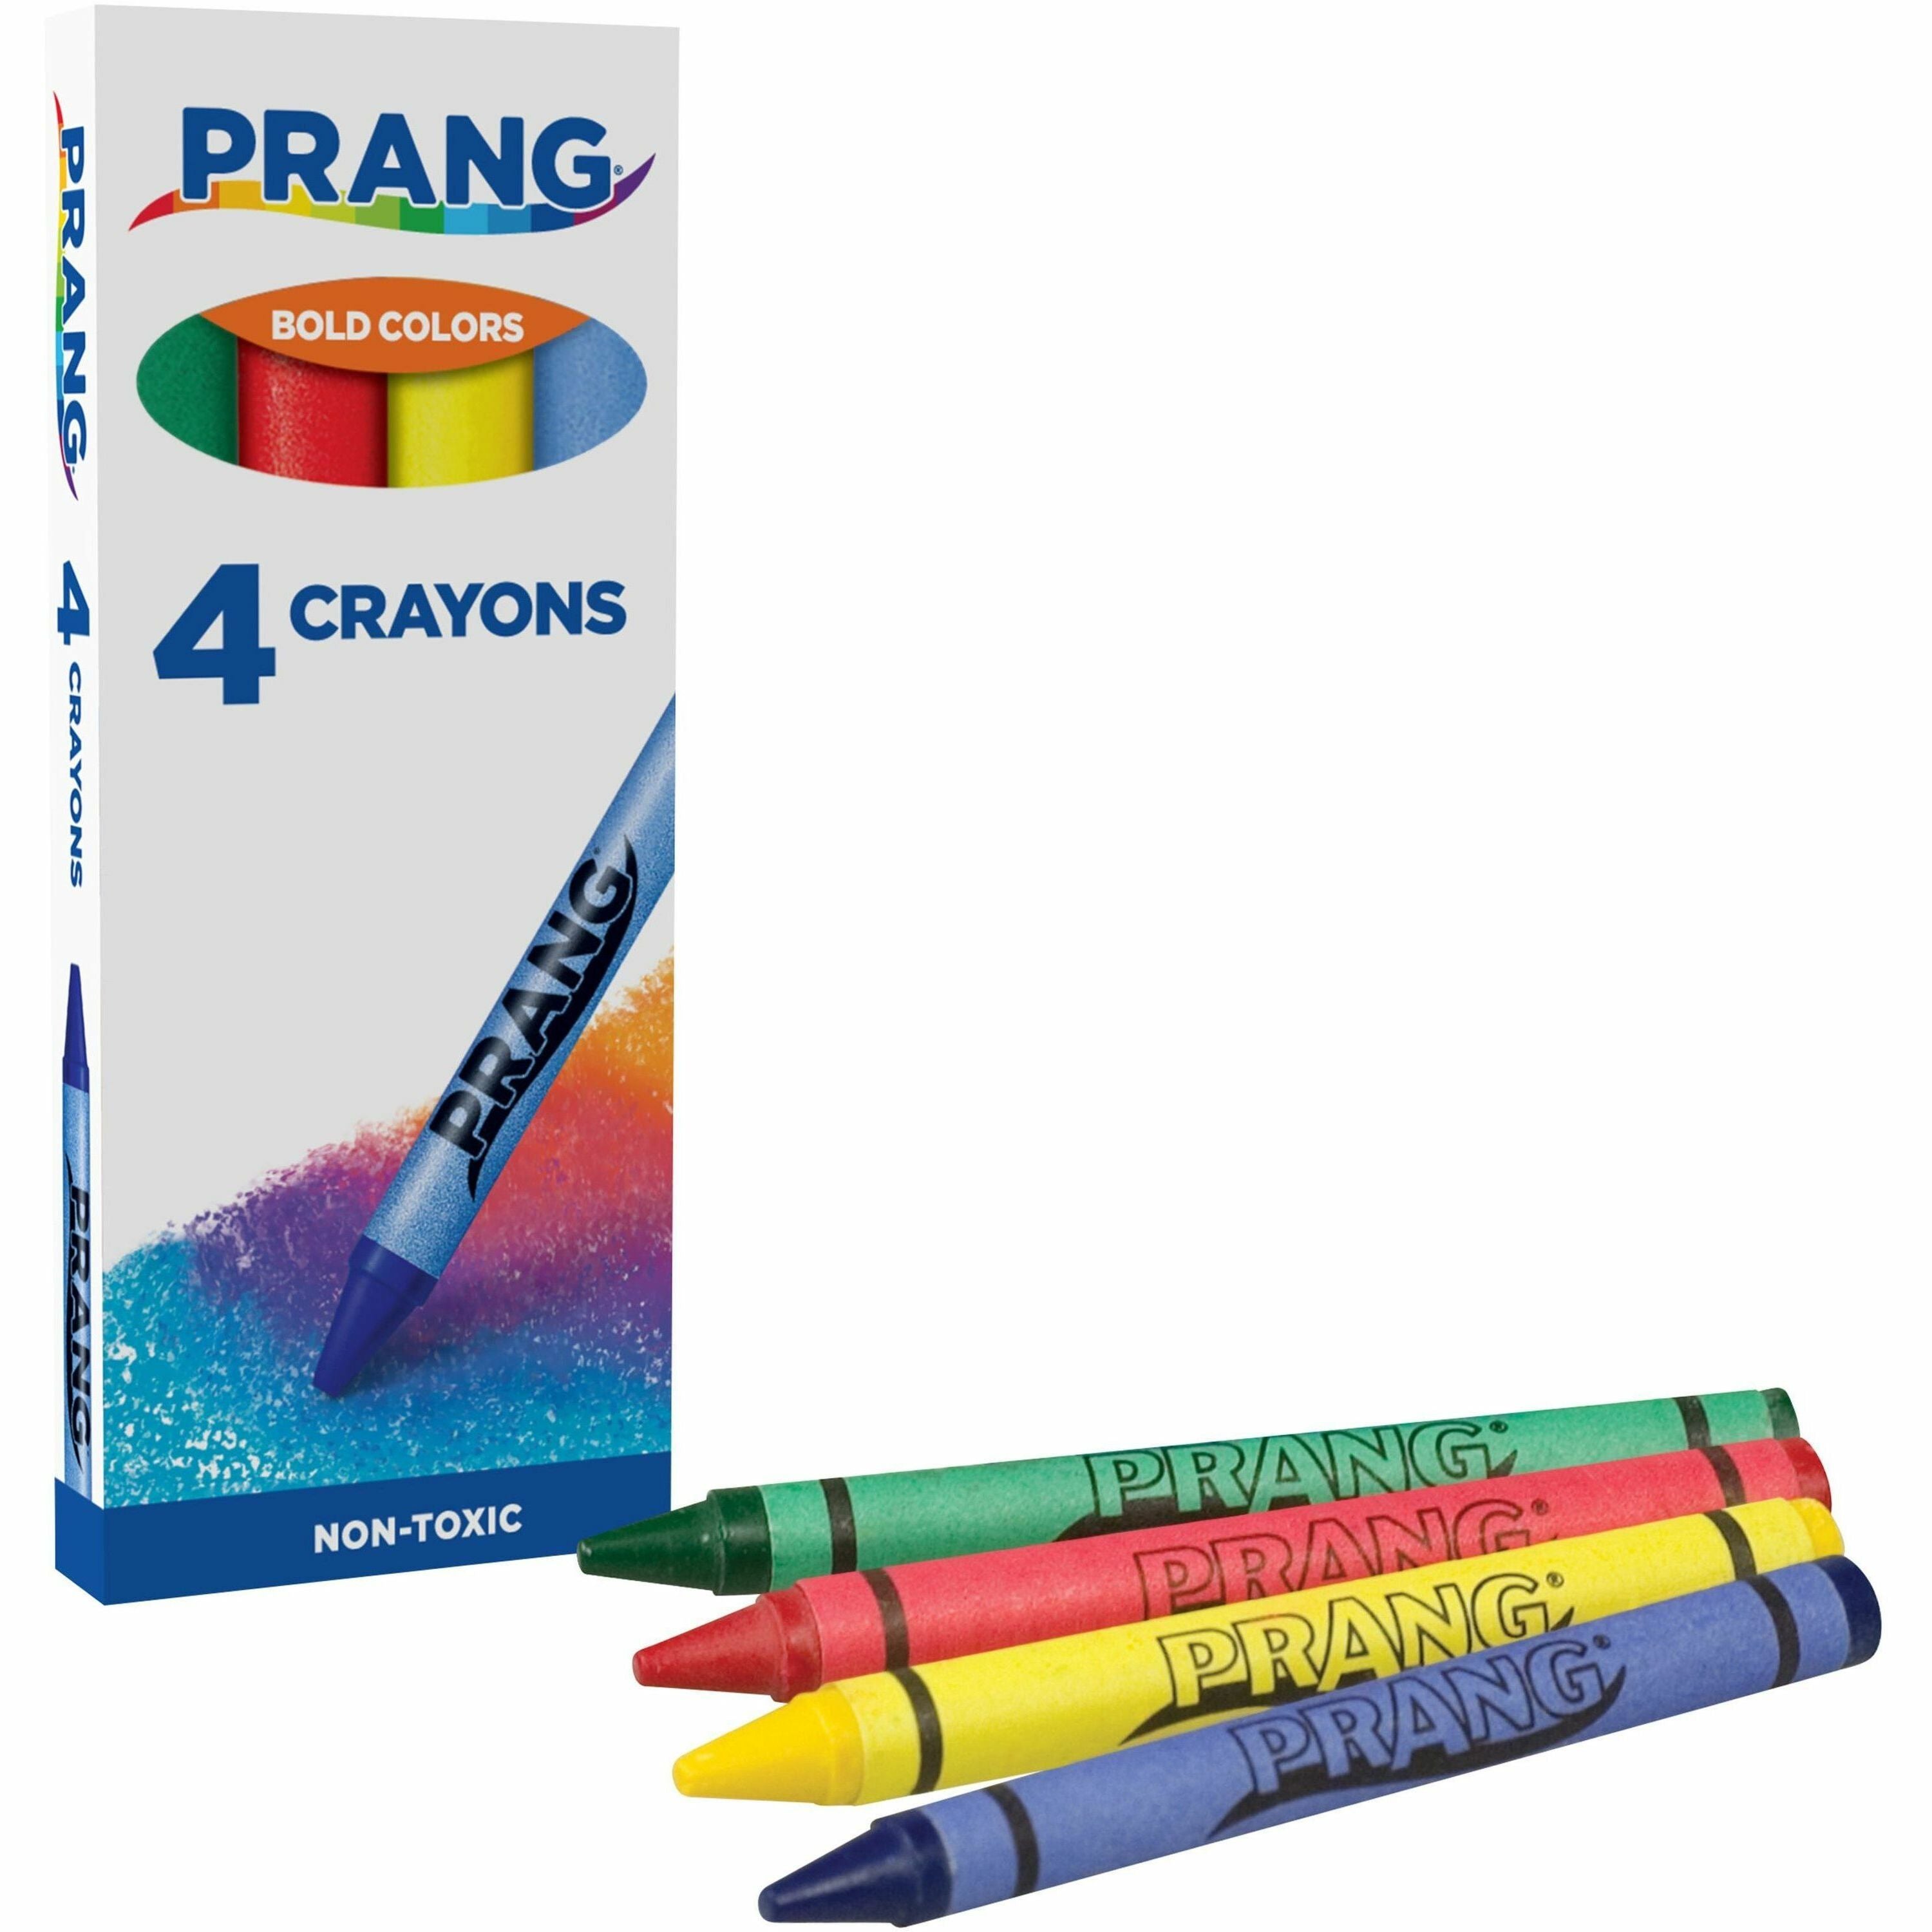 prang-crayons-green-red-yellow-blue-4-pack_dixx150 - 1